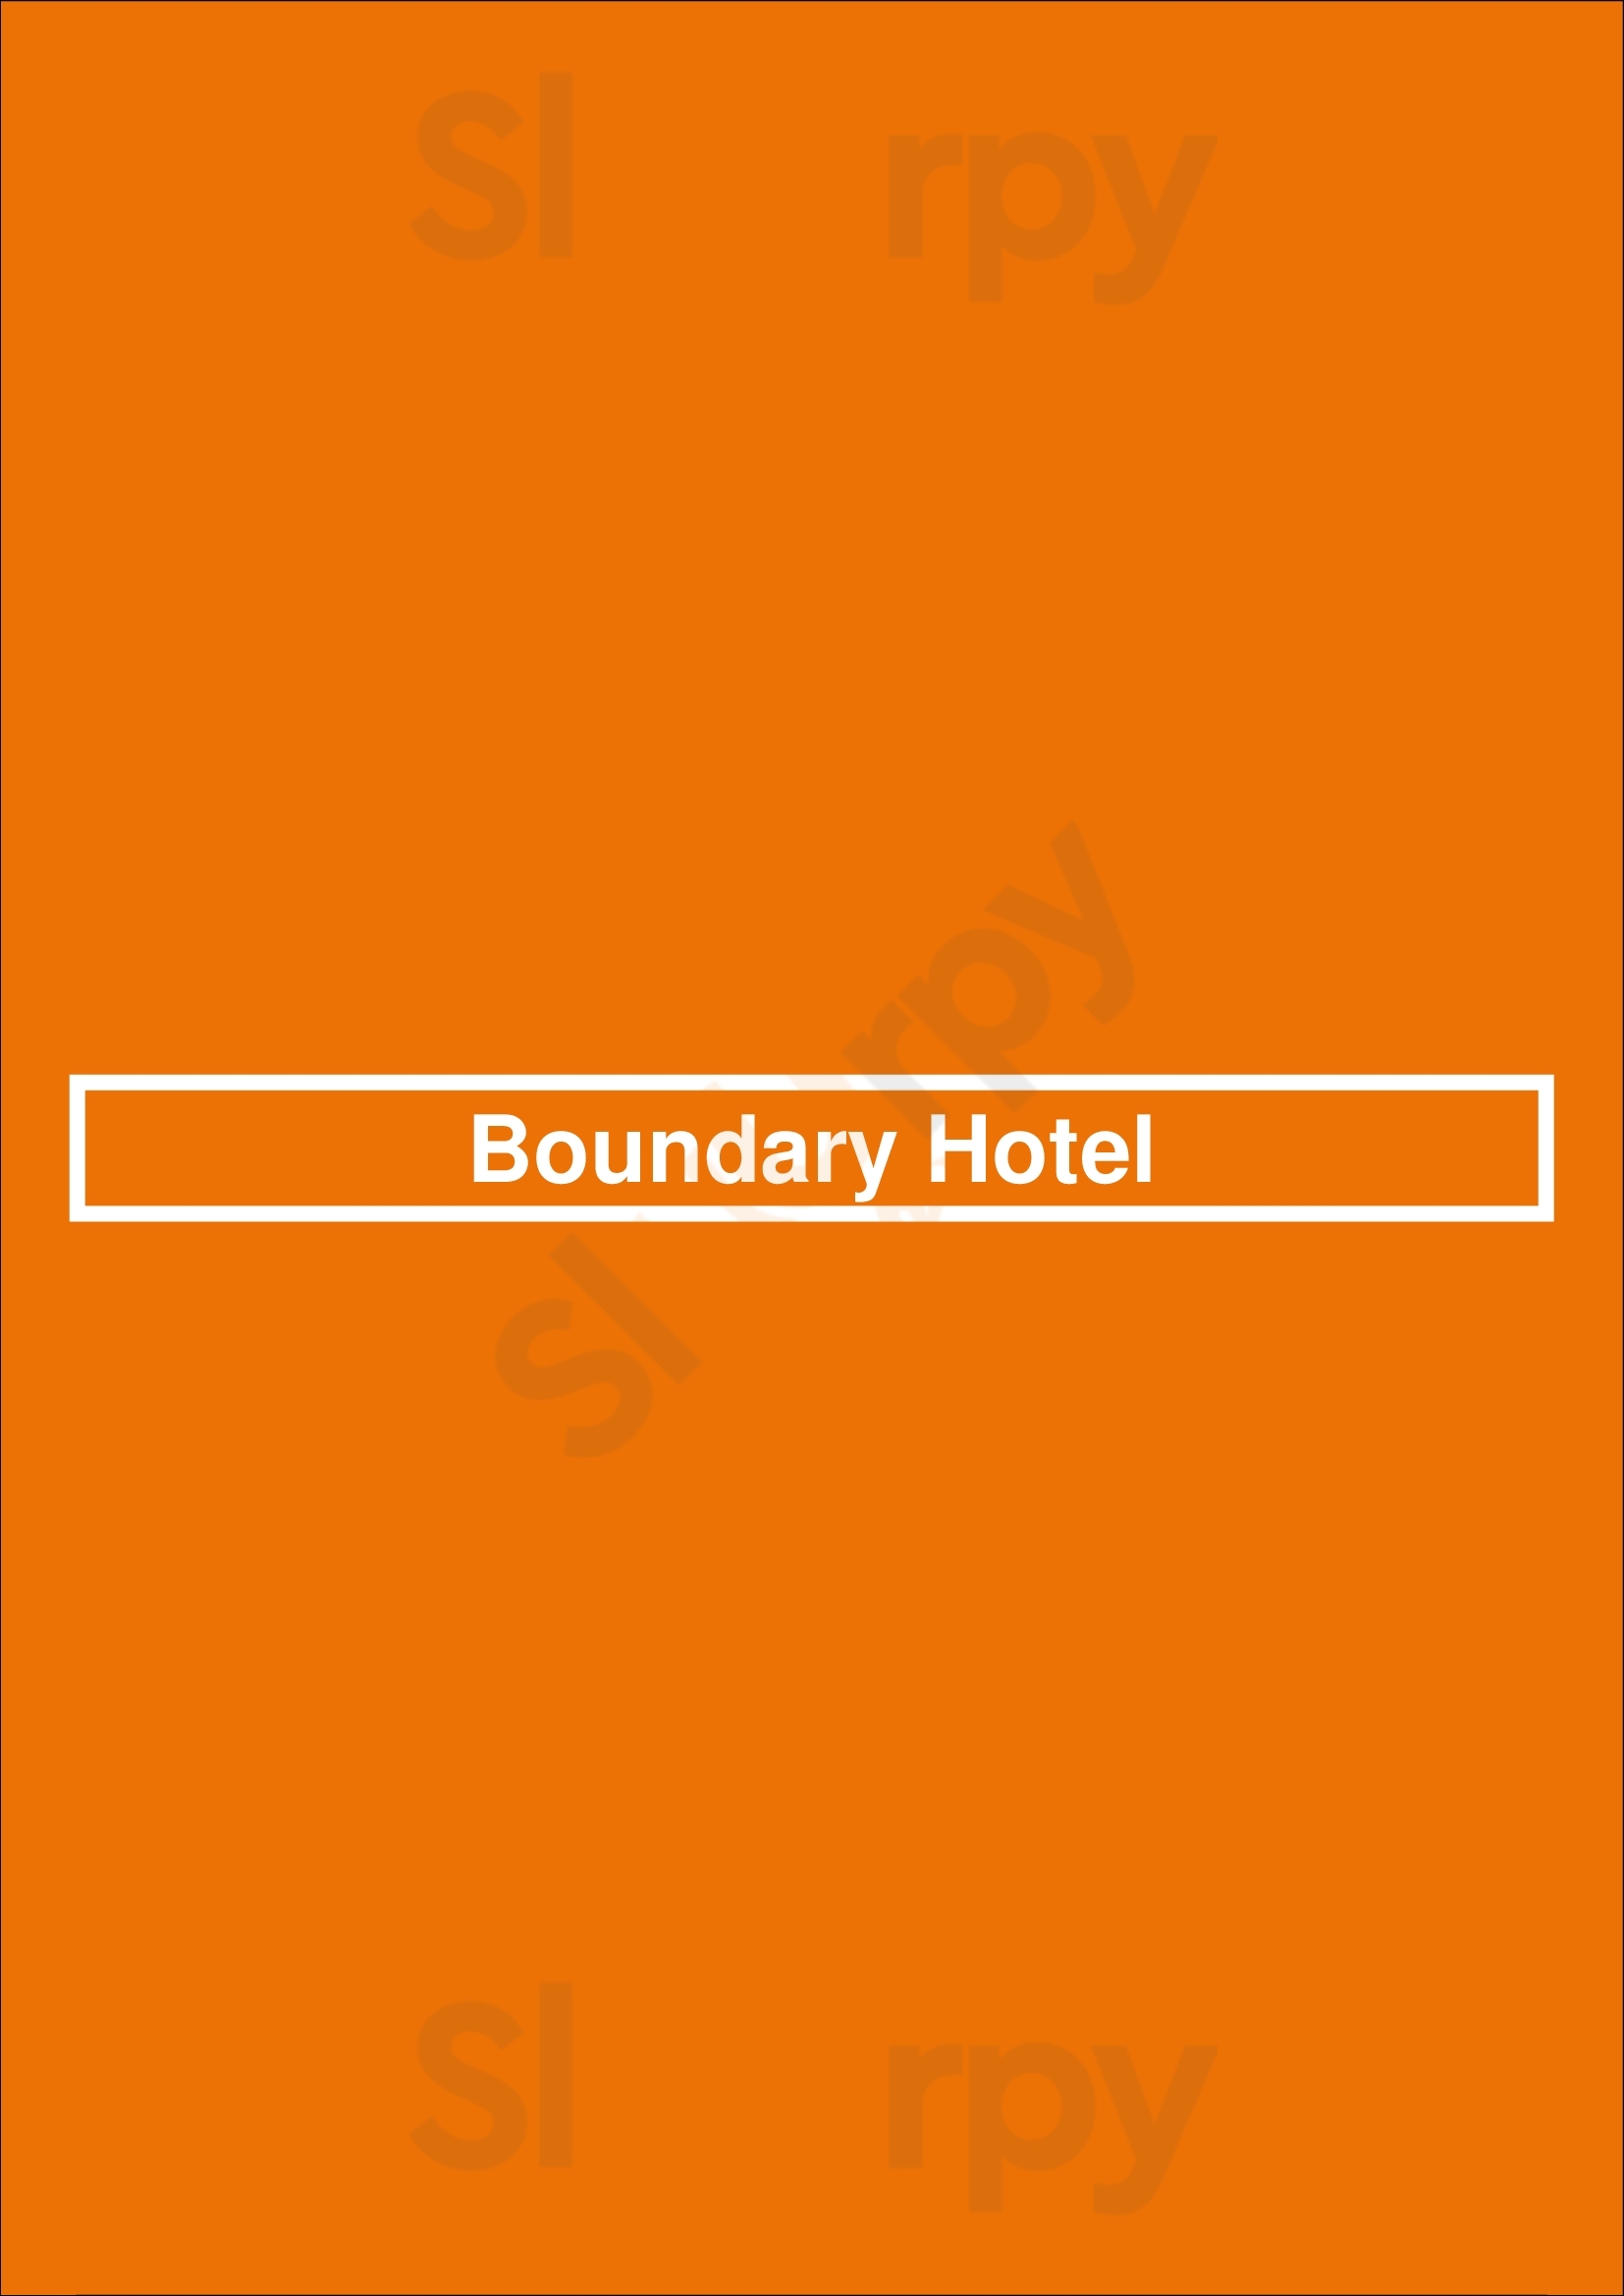 Boundary Hotel Bentleigh Menu - 1